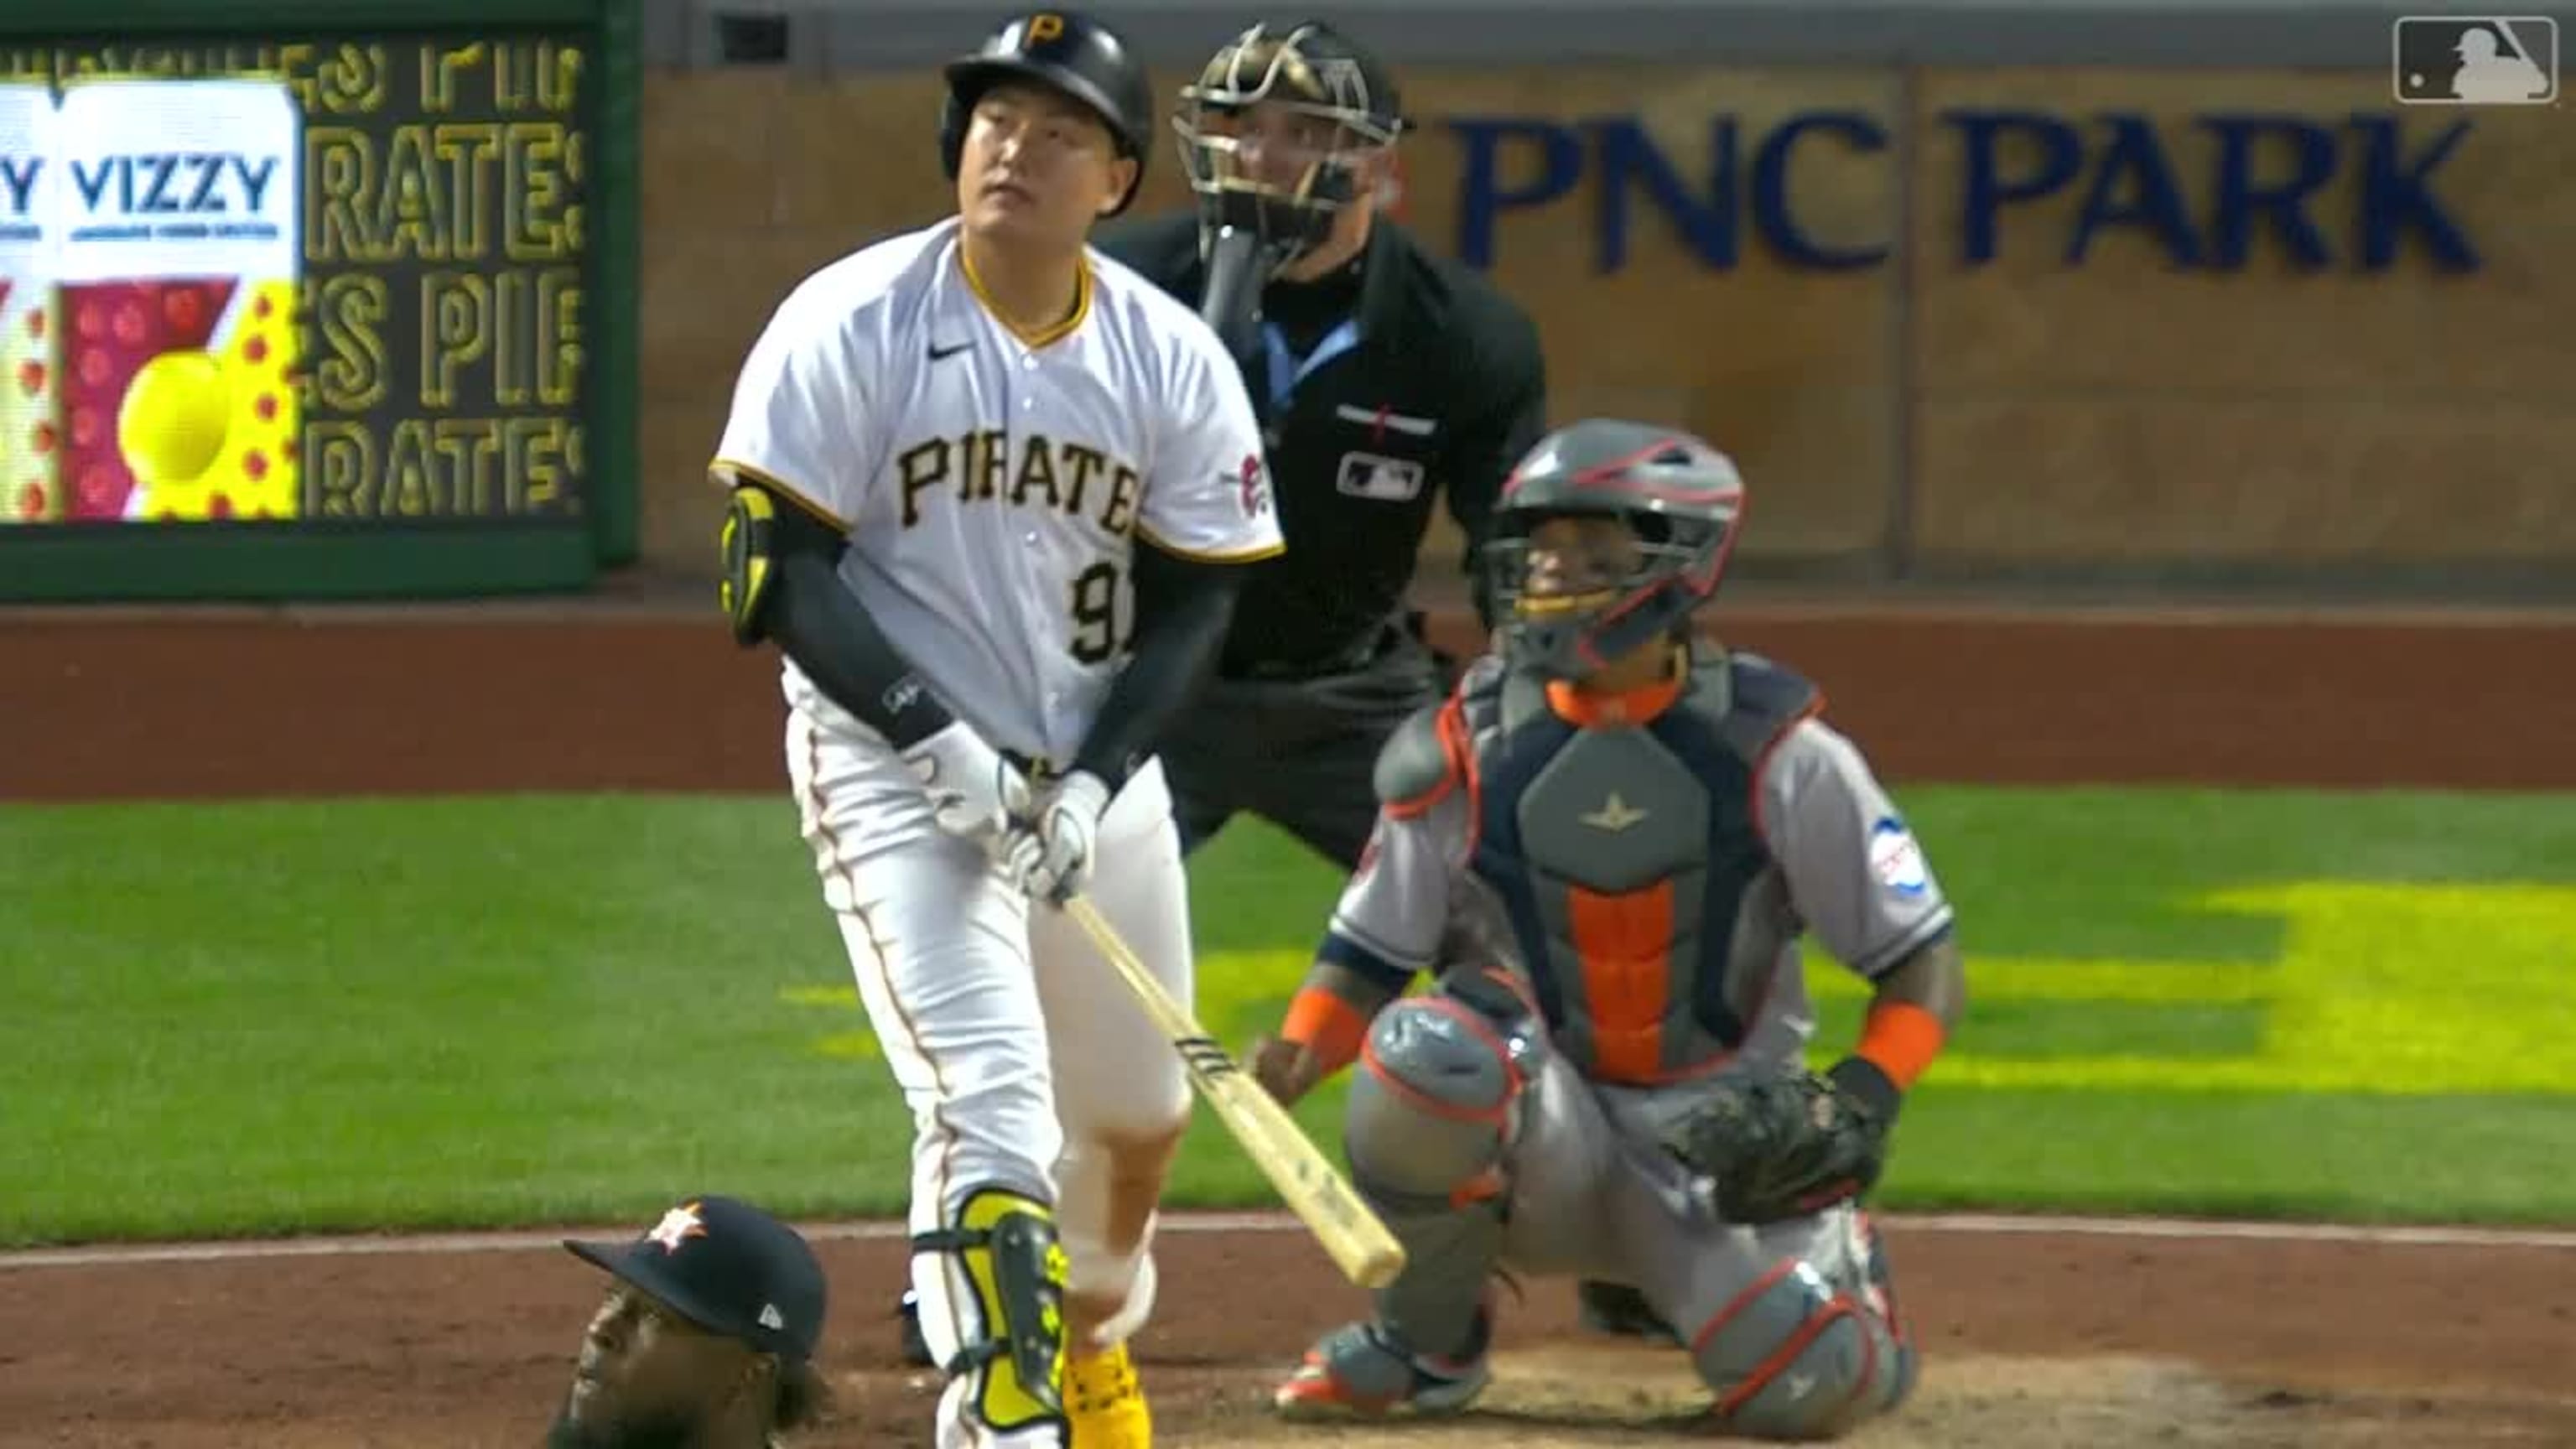 Ji Man Choi - MLB First base - News, Stats, Bio and more - The